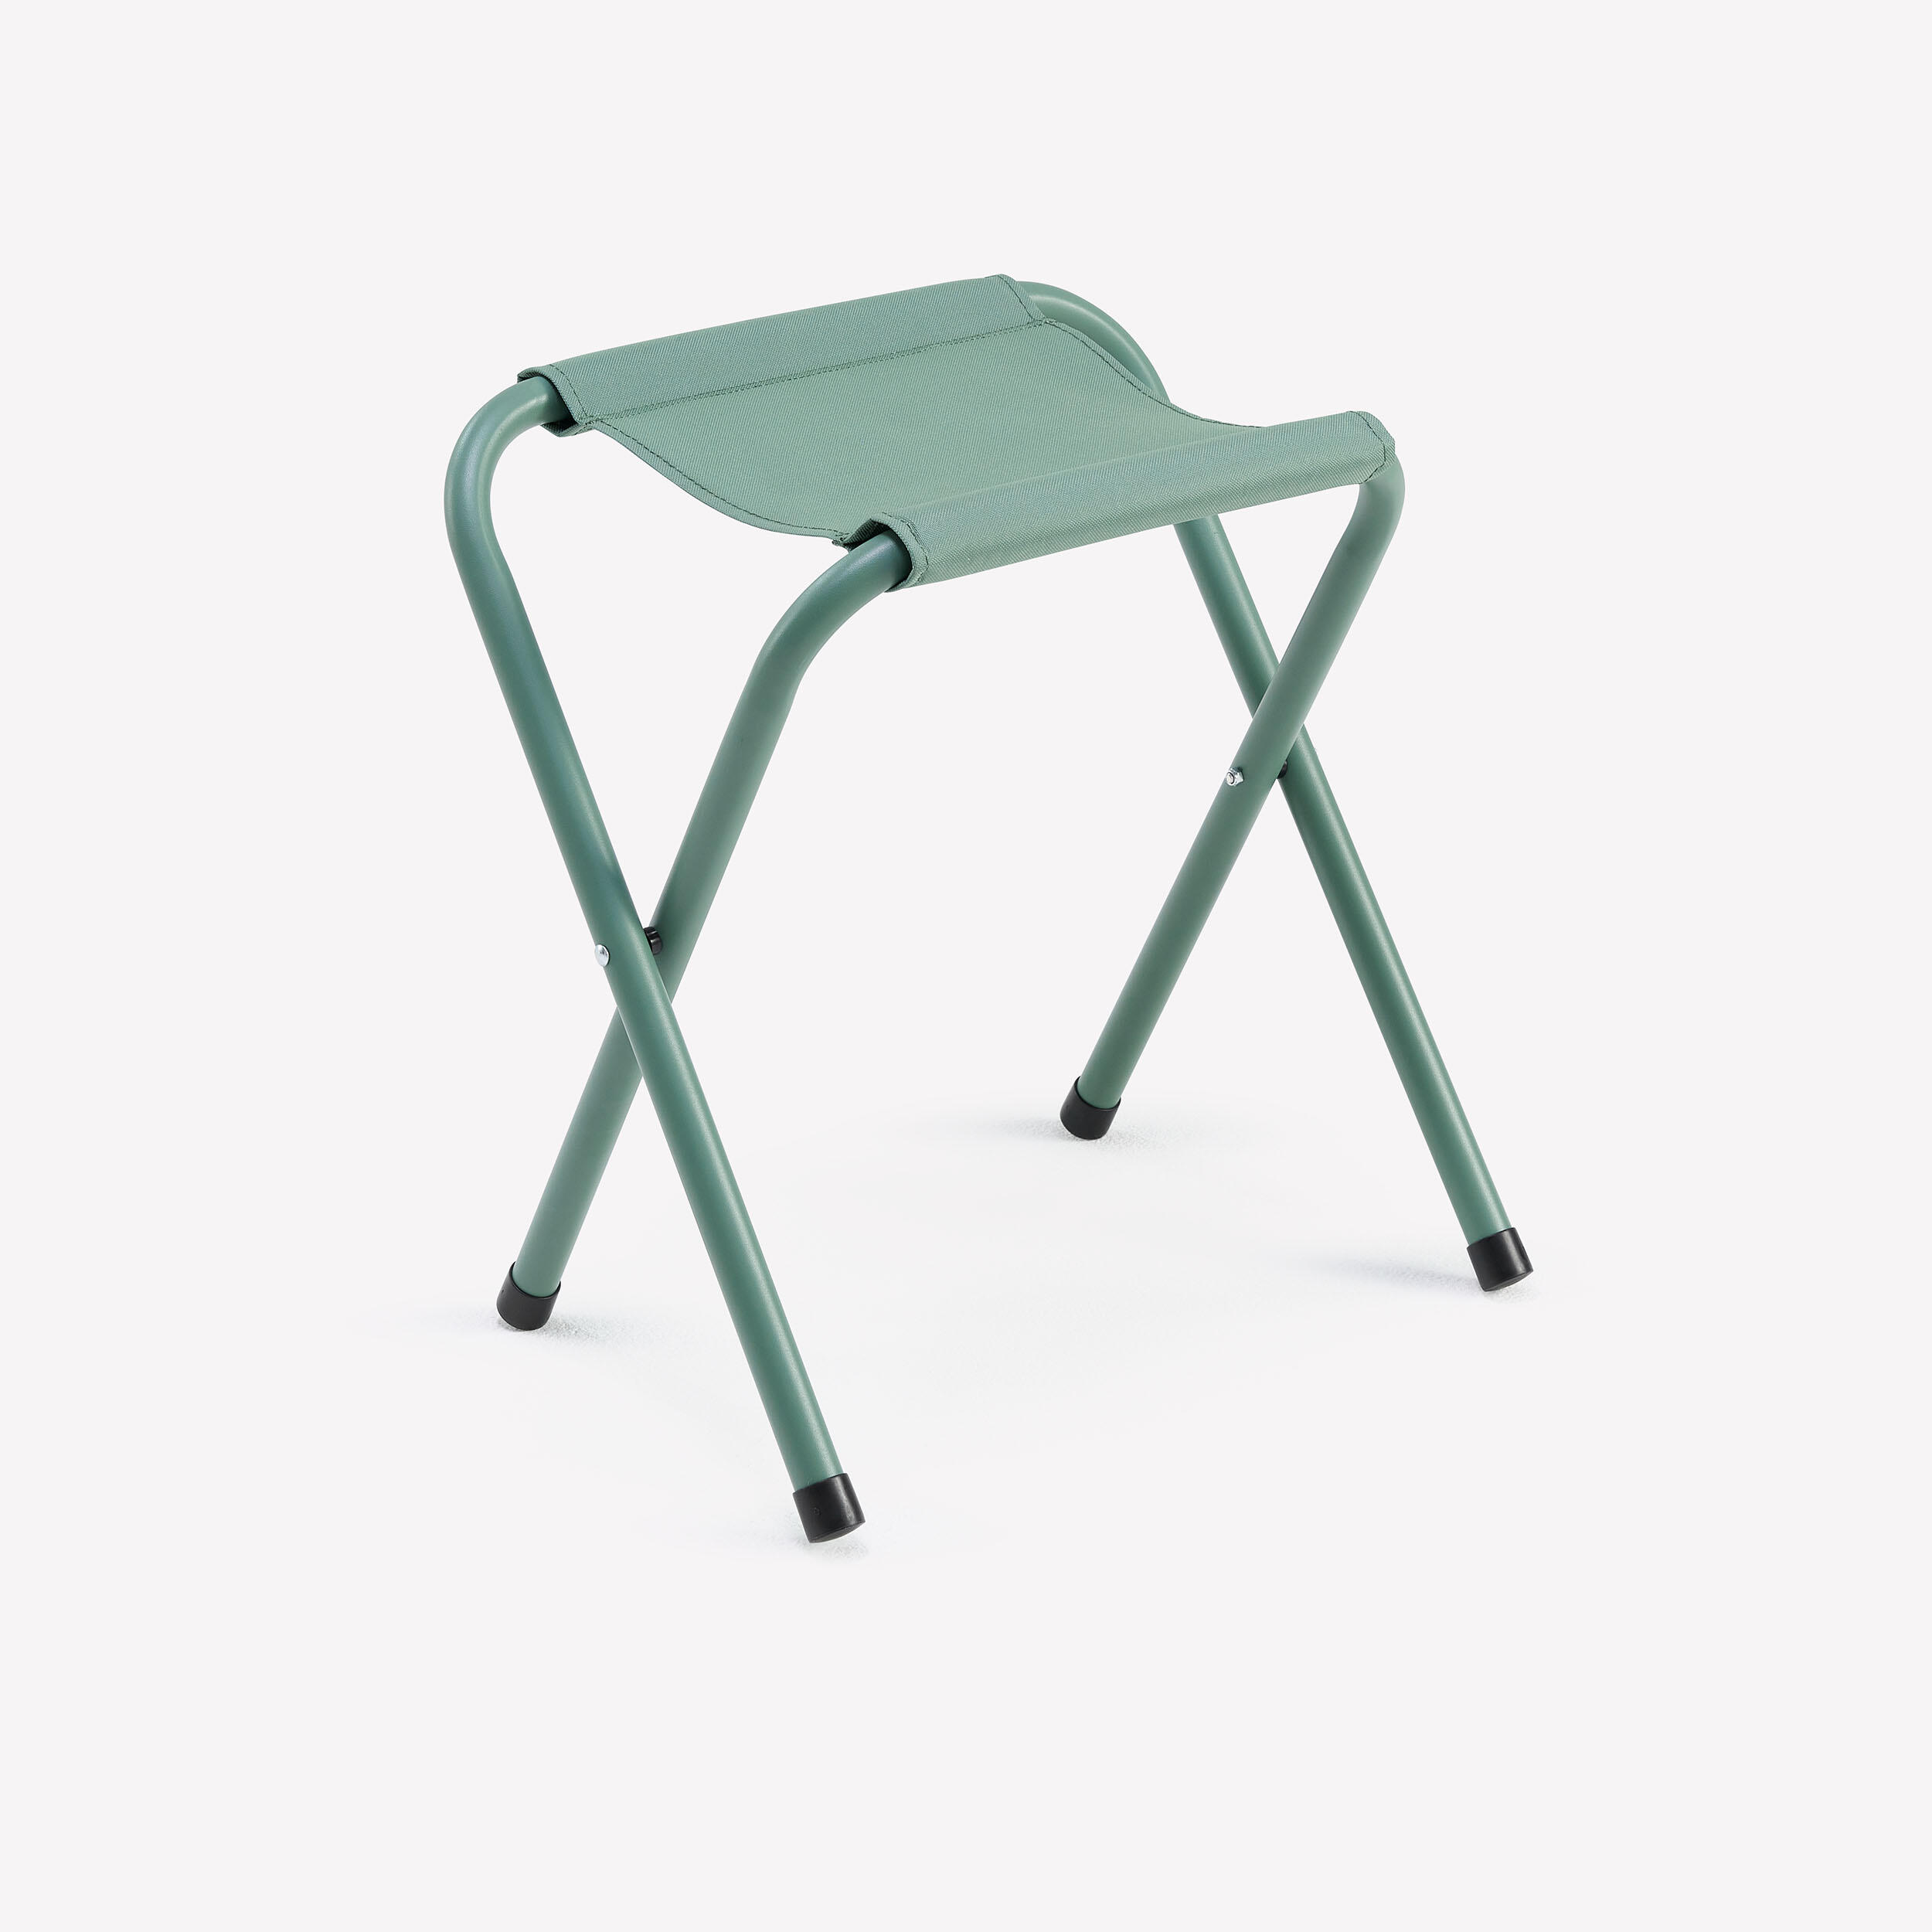 Folding camping stool - green 1/3